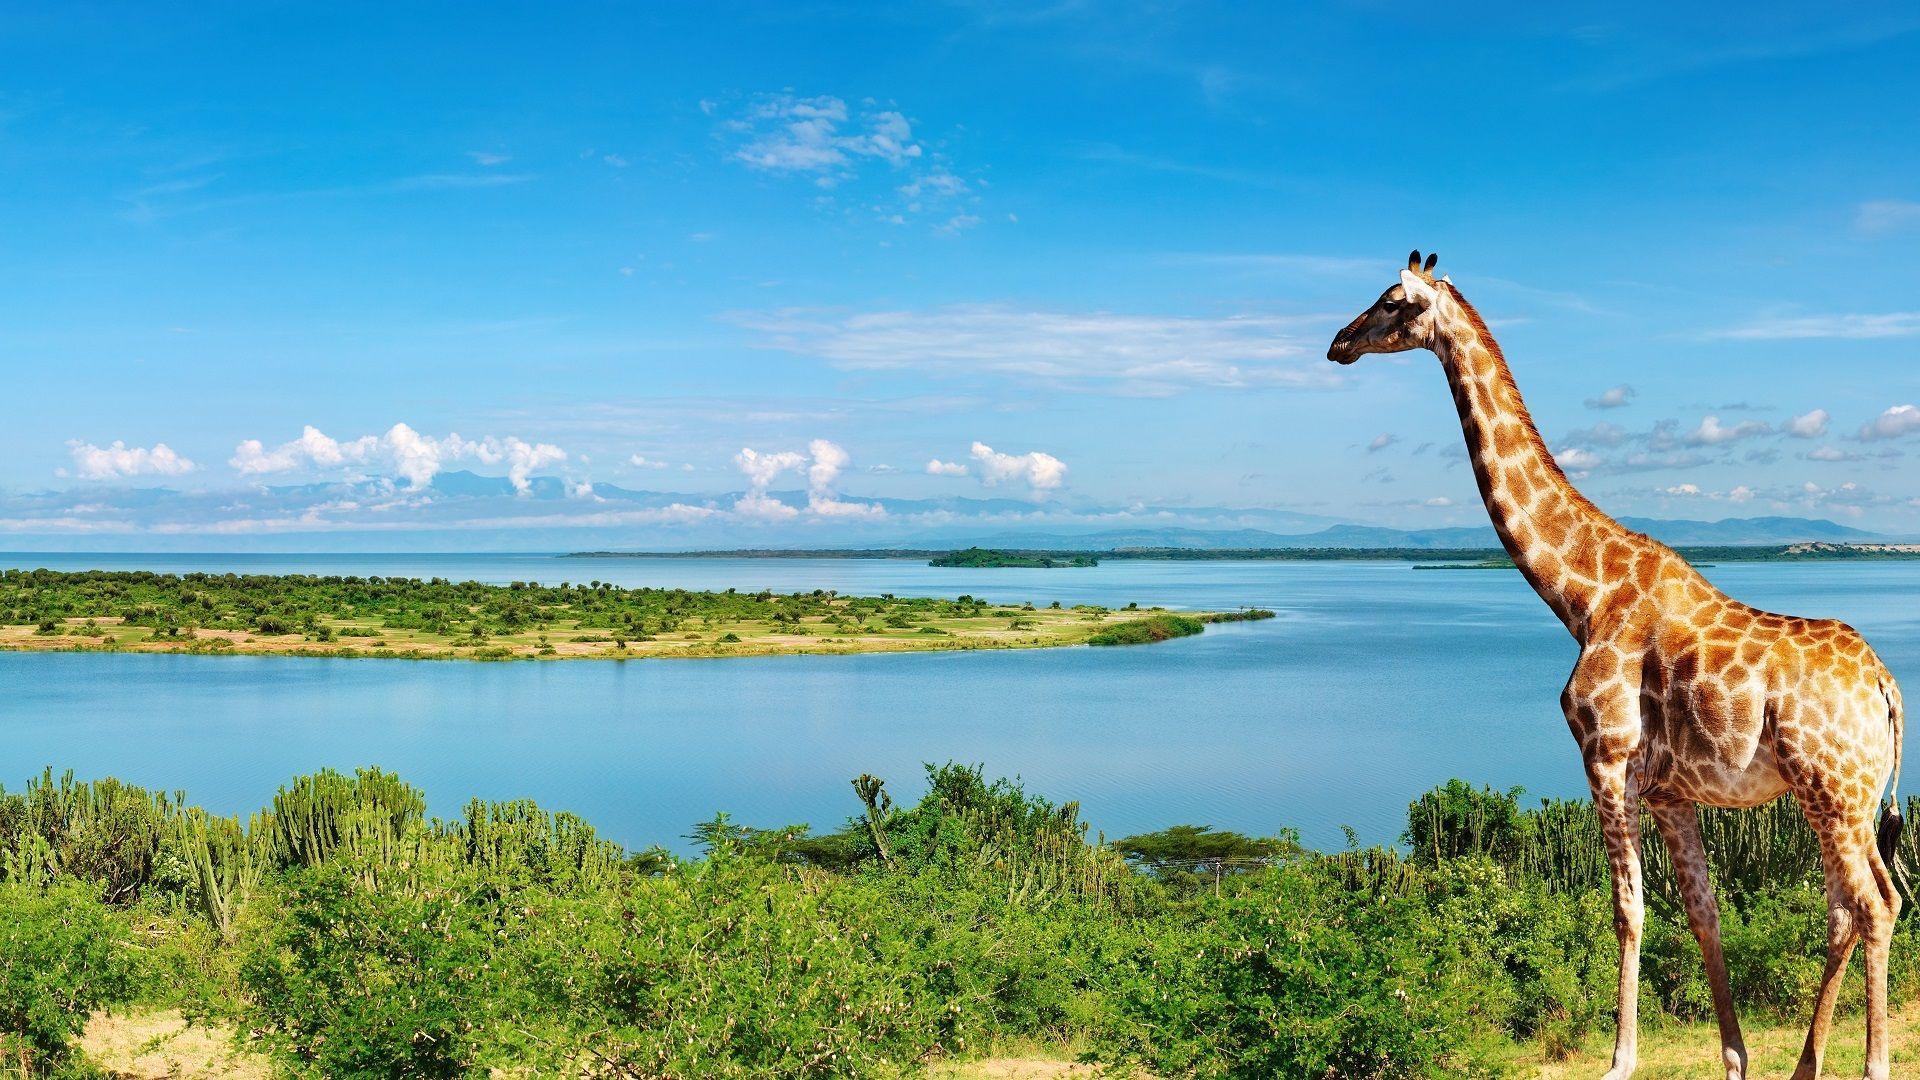 Wallpaper.wiki Giraffe At The Nile River Side Africa Wallpaper PIC